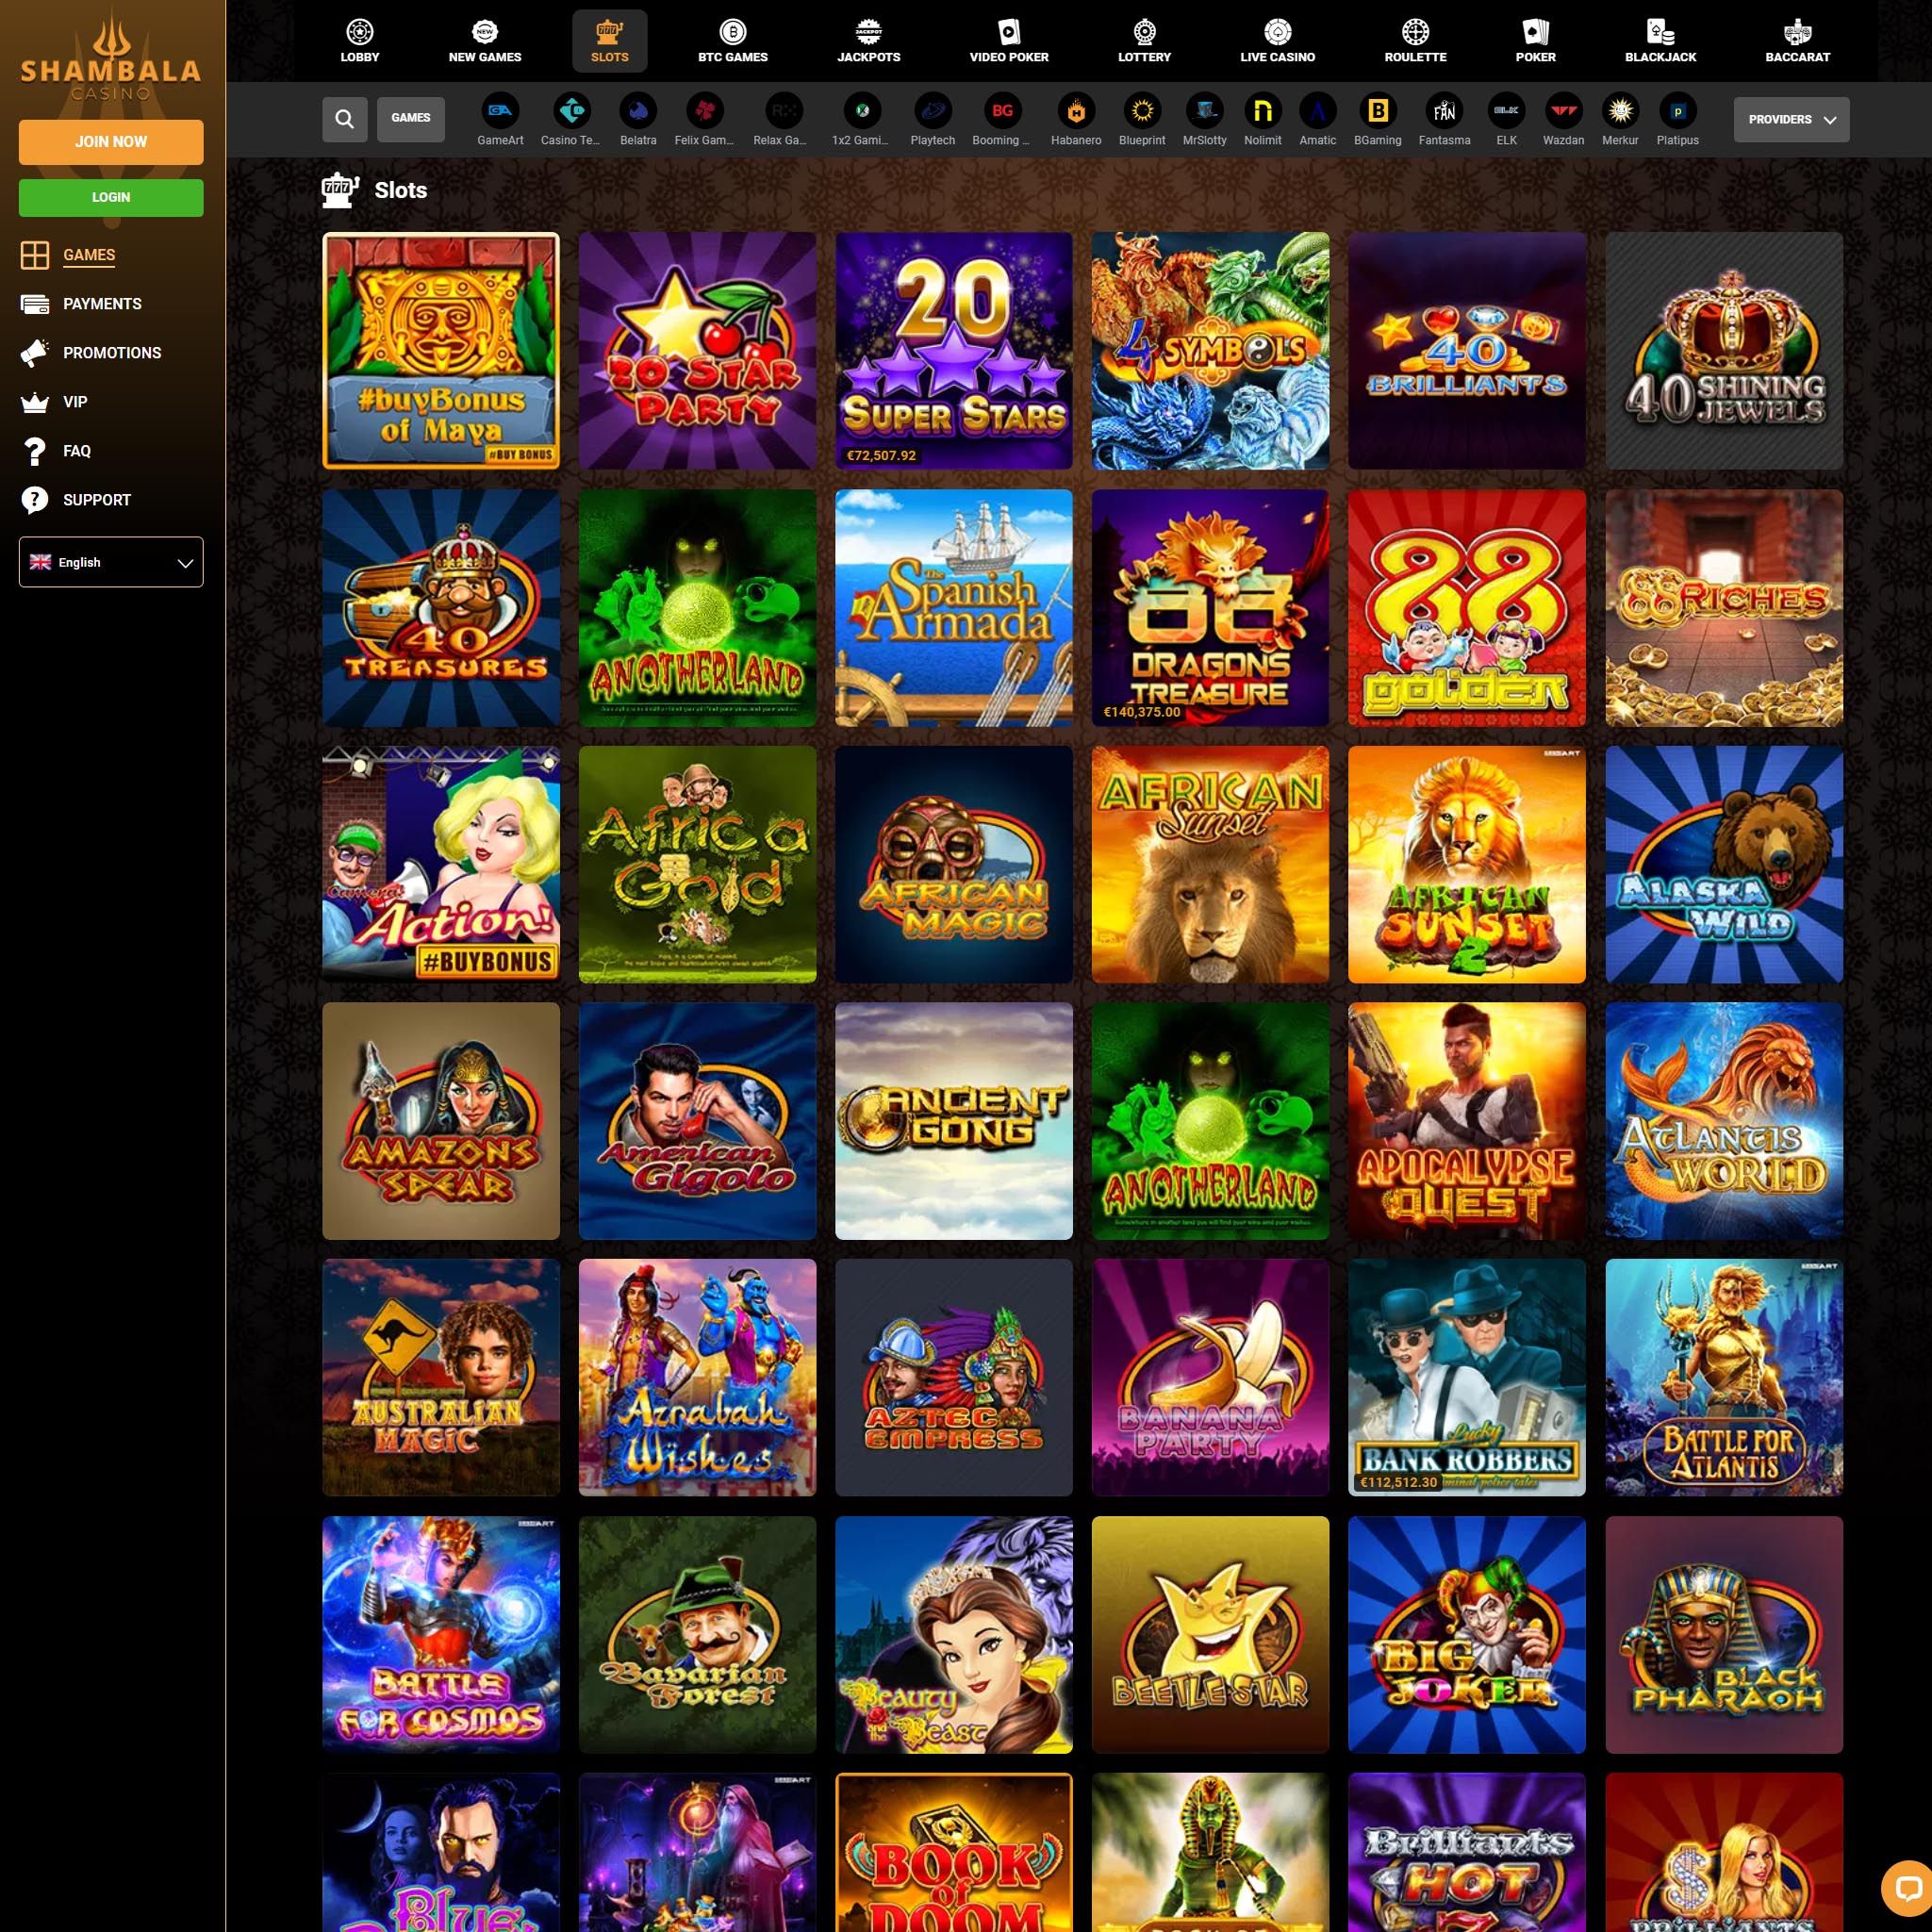 Shambala Casino full games catalogue